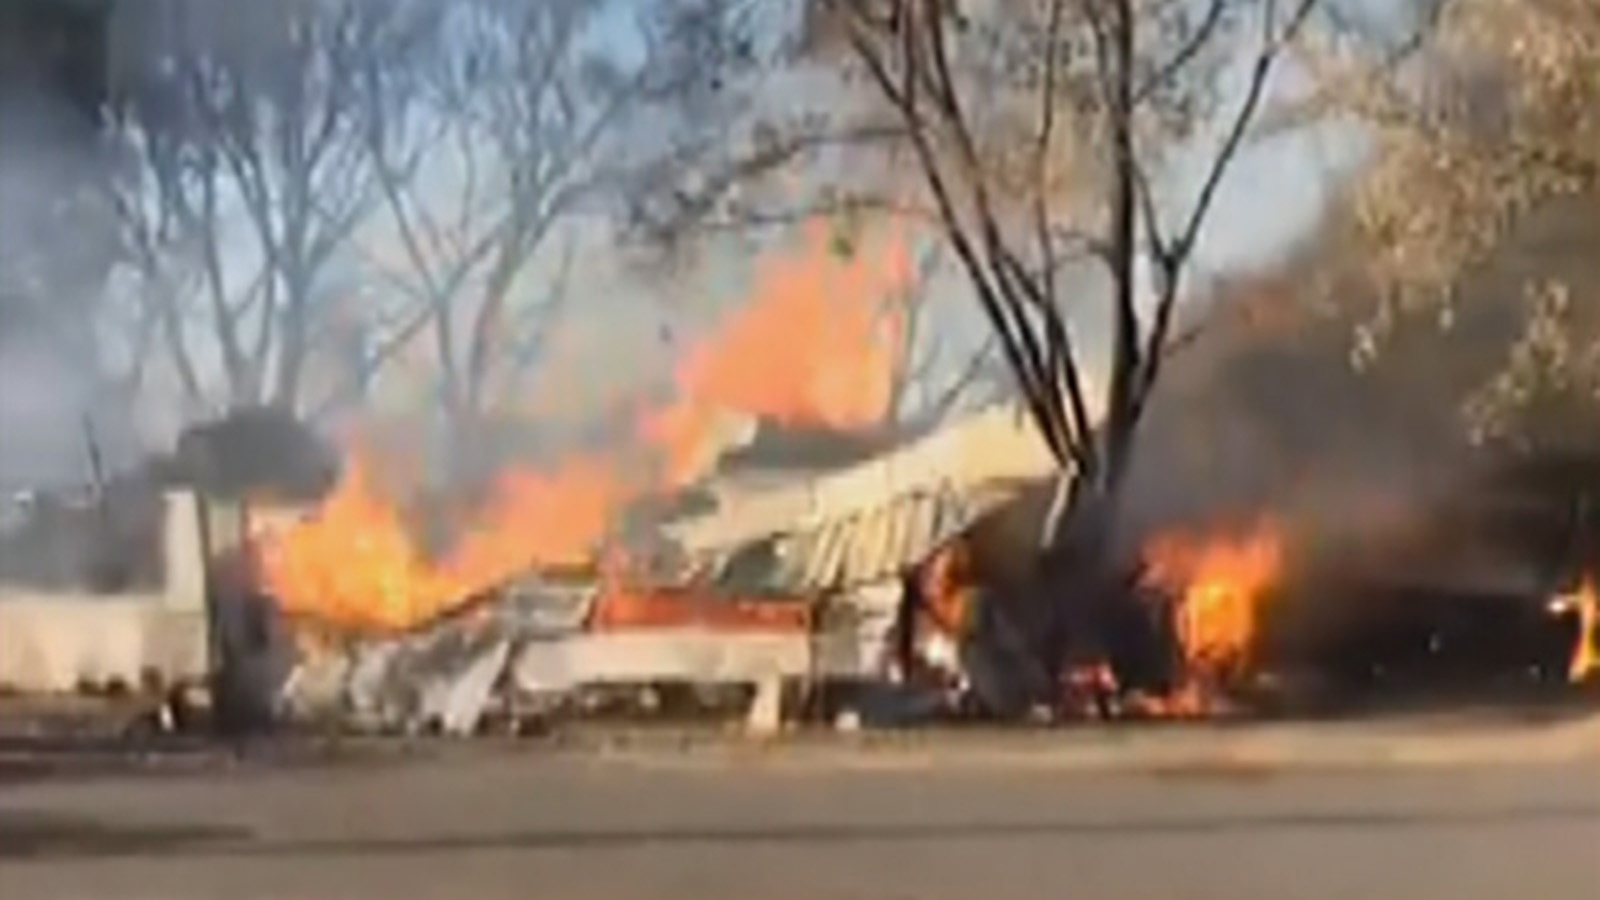 Fire In Moffat Destroys 3 Homes, Building - CBS Denver